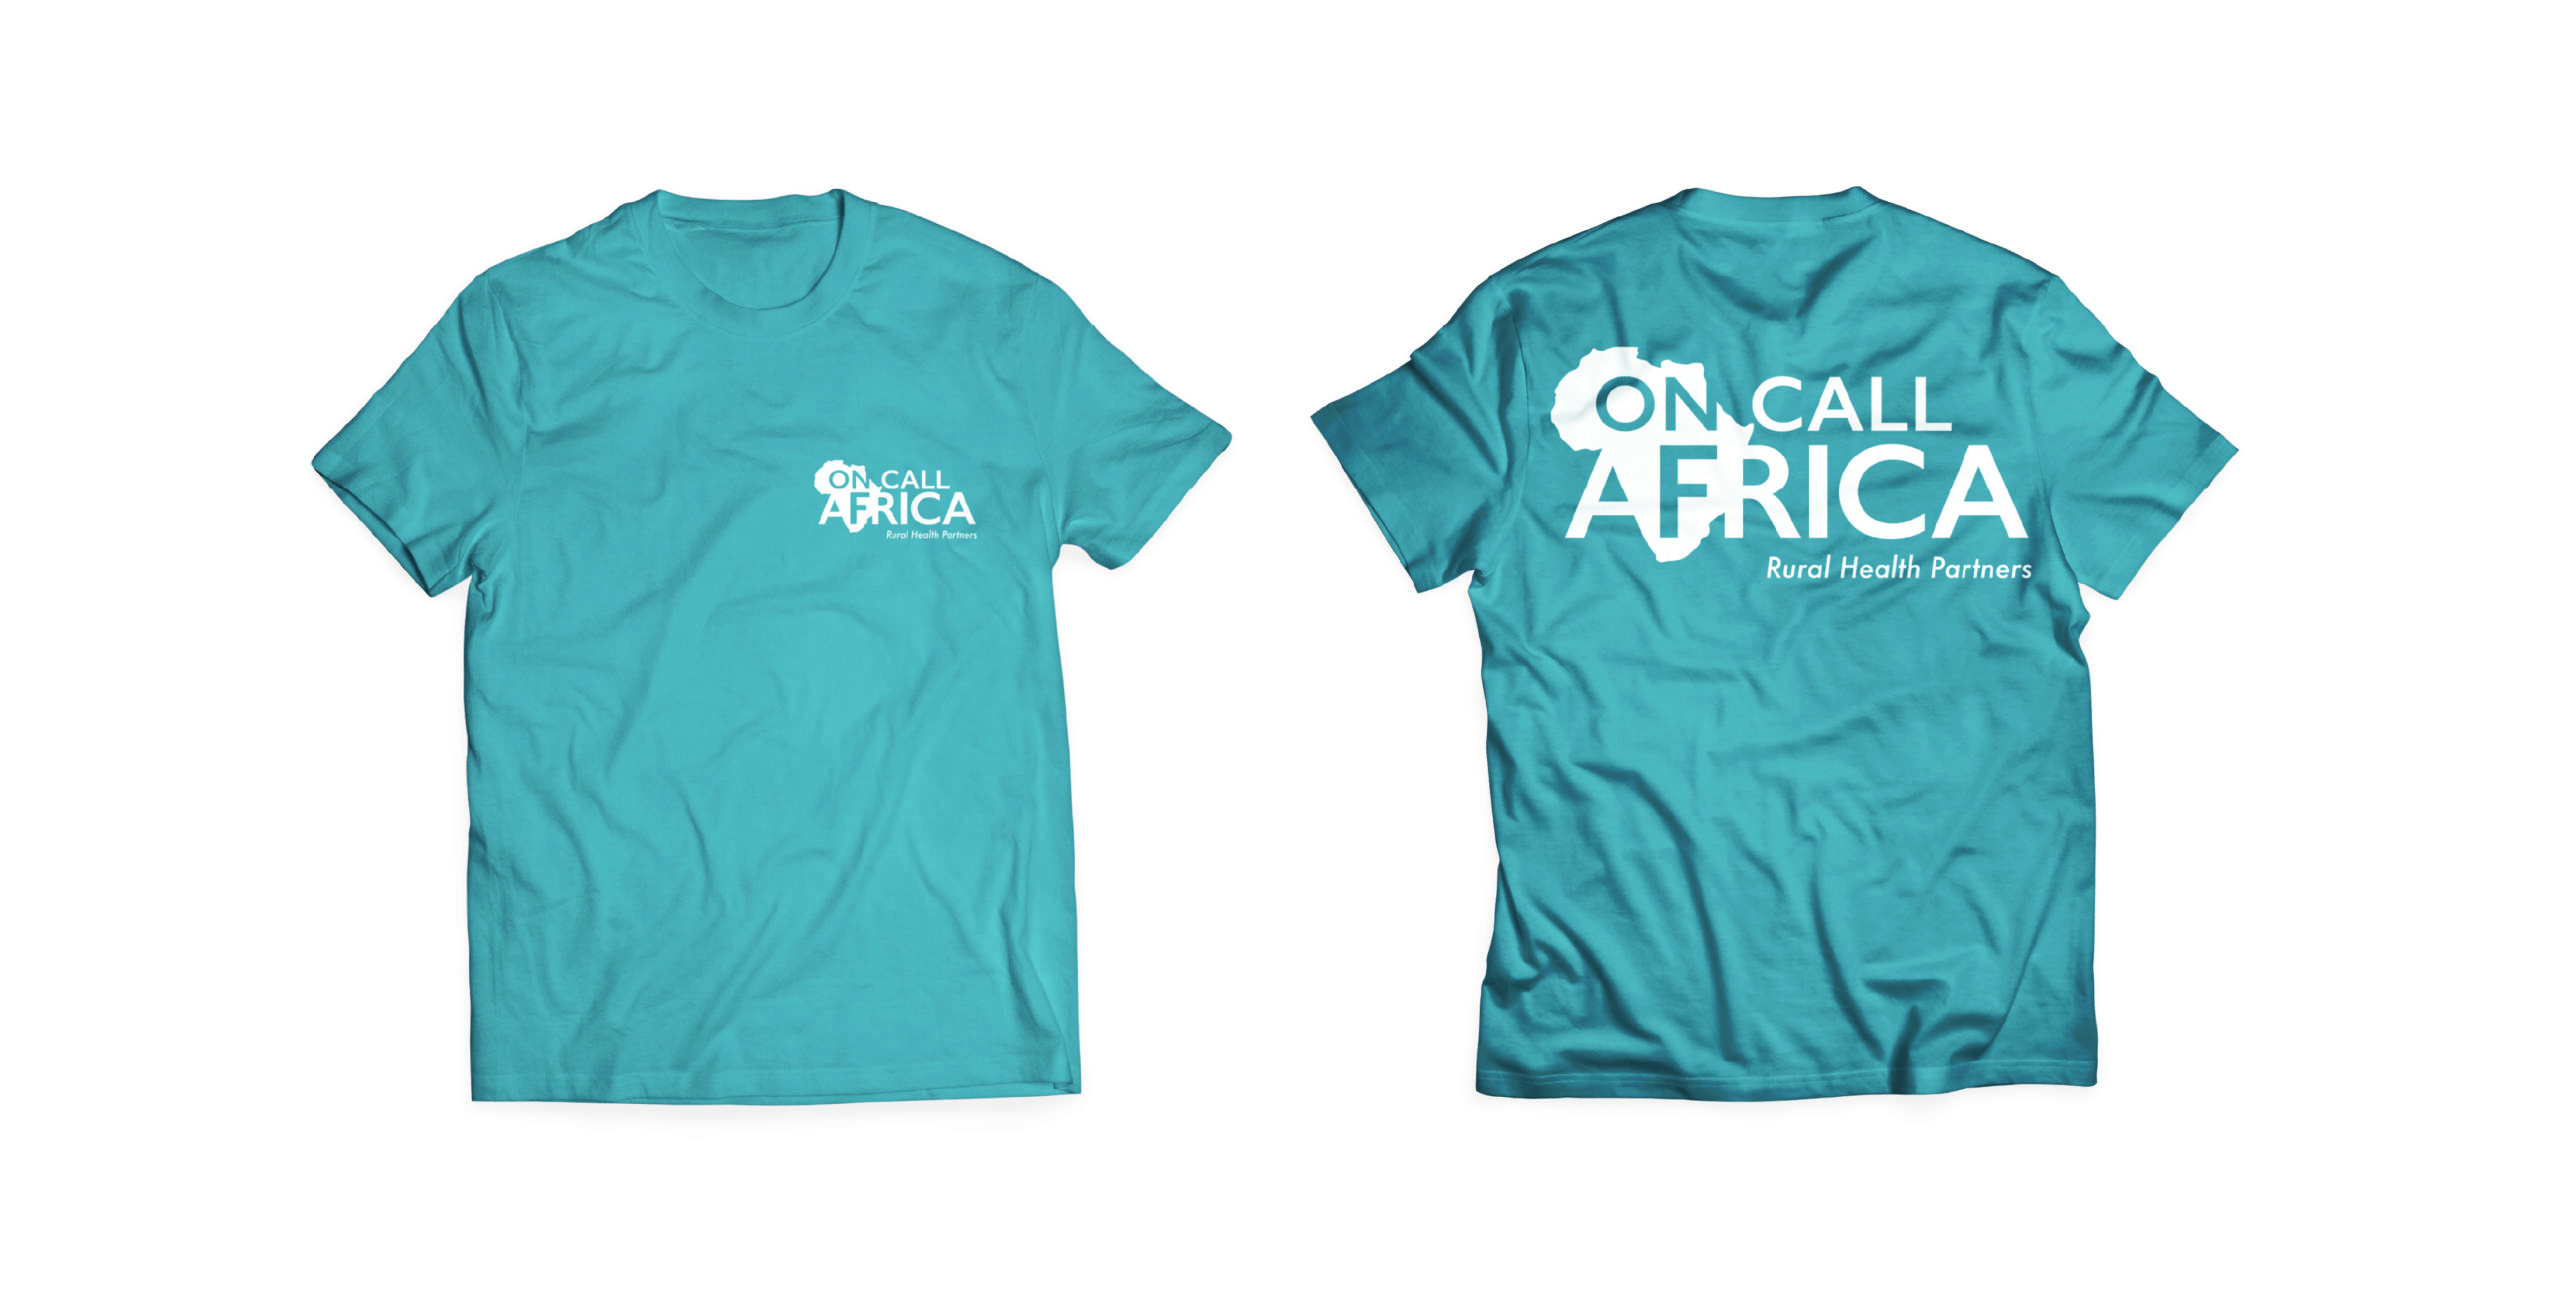 On call Africa Tshirt Design